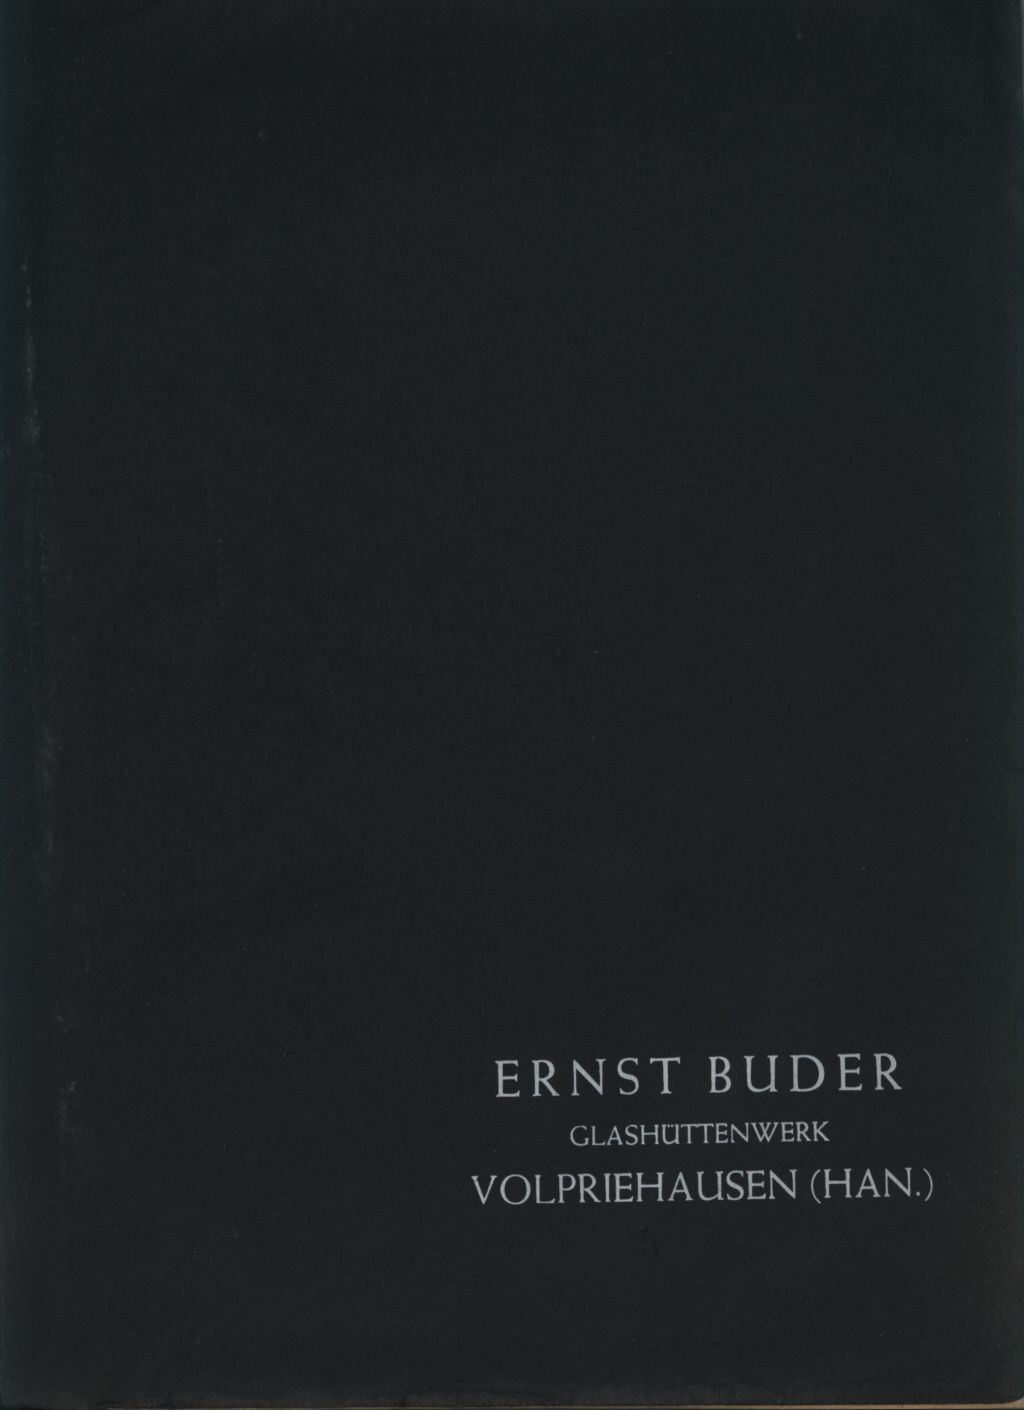 "Ernst Buder 1960"